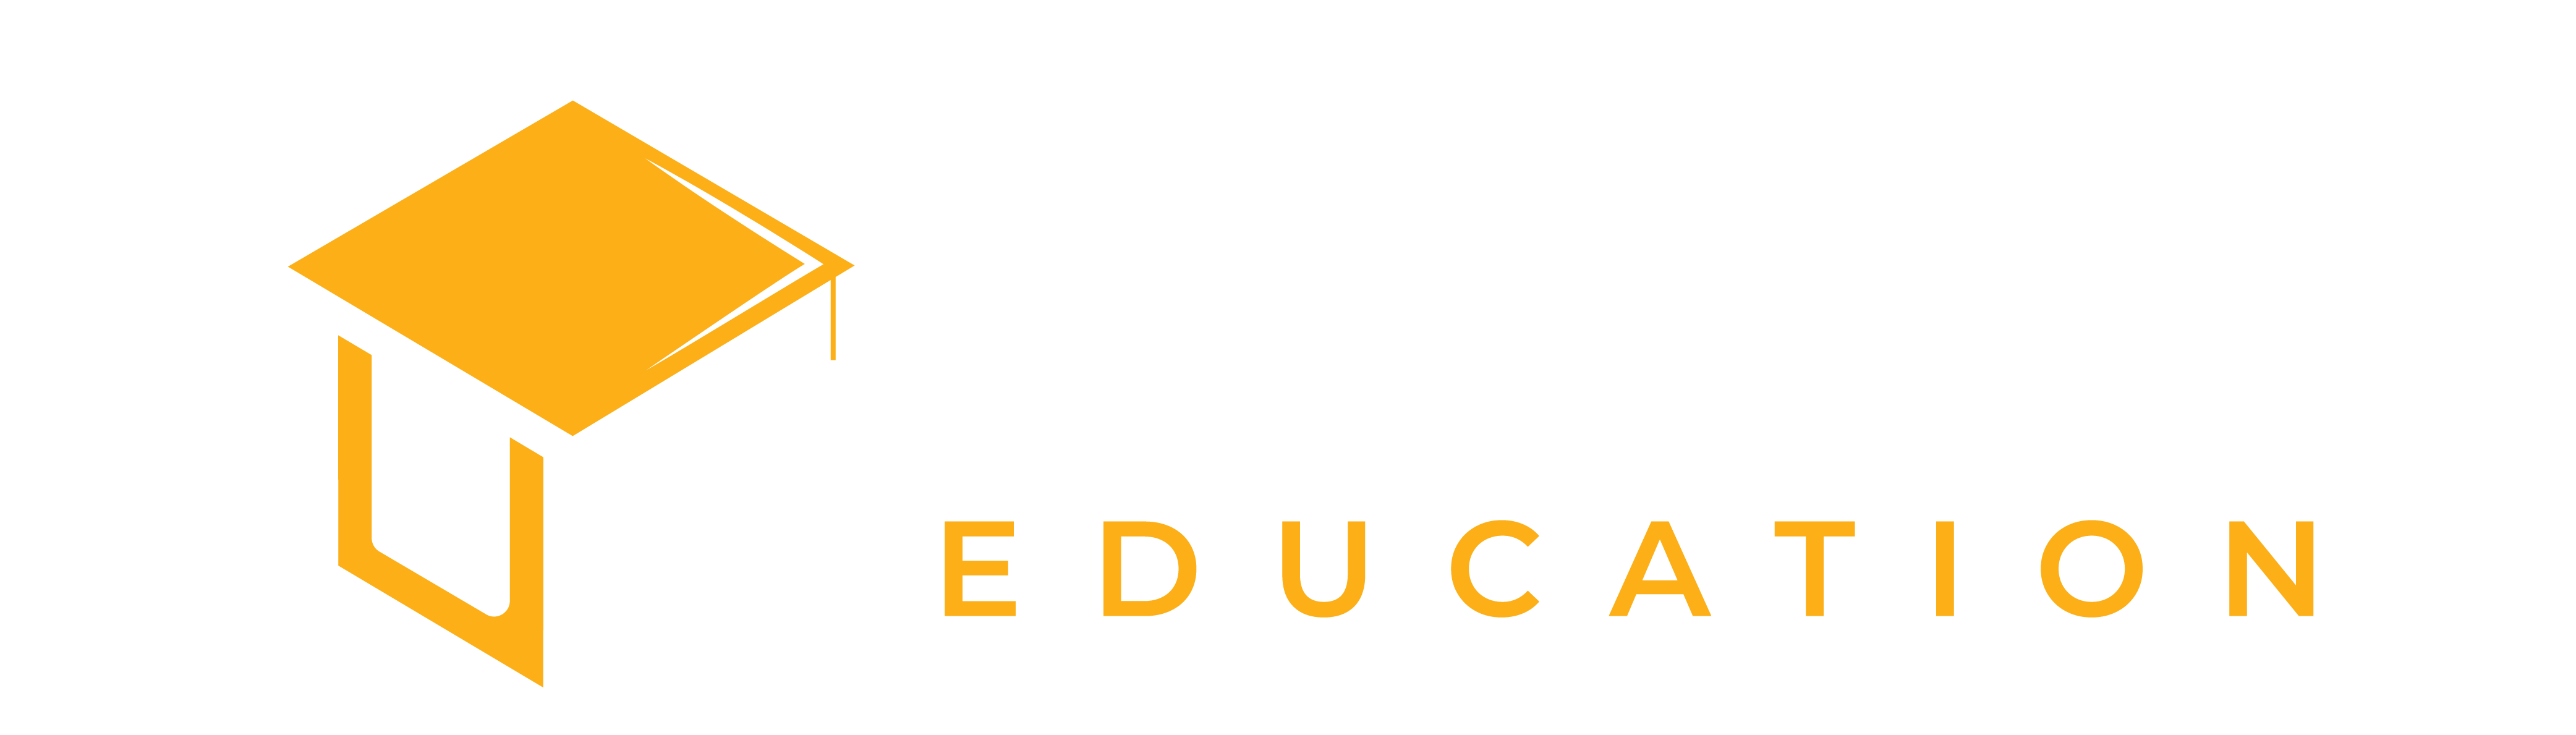 Uranus education logo